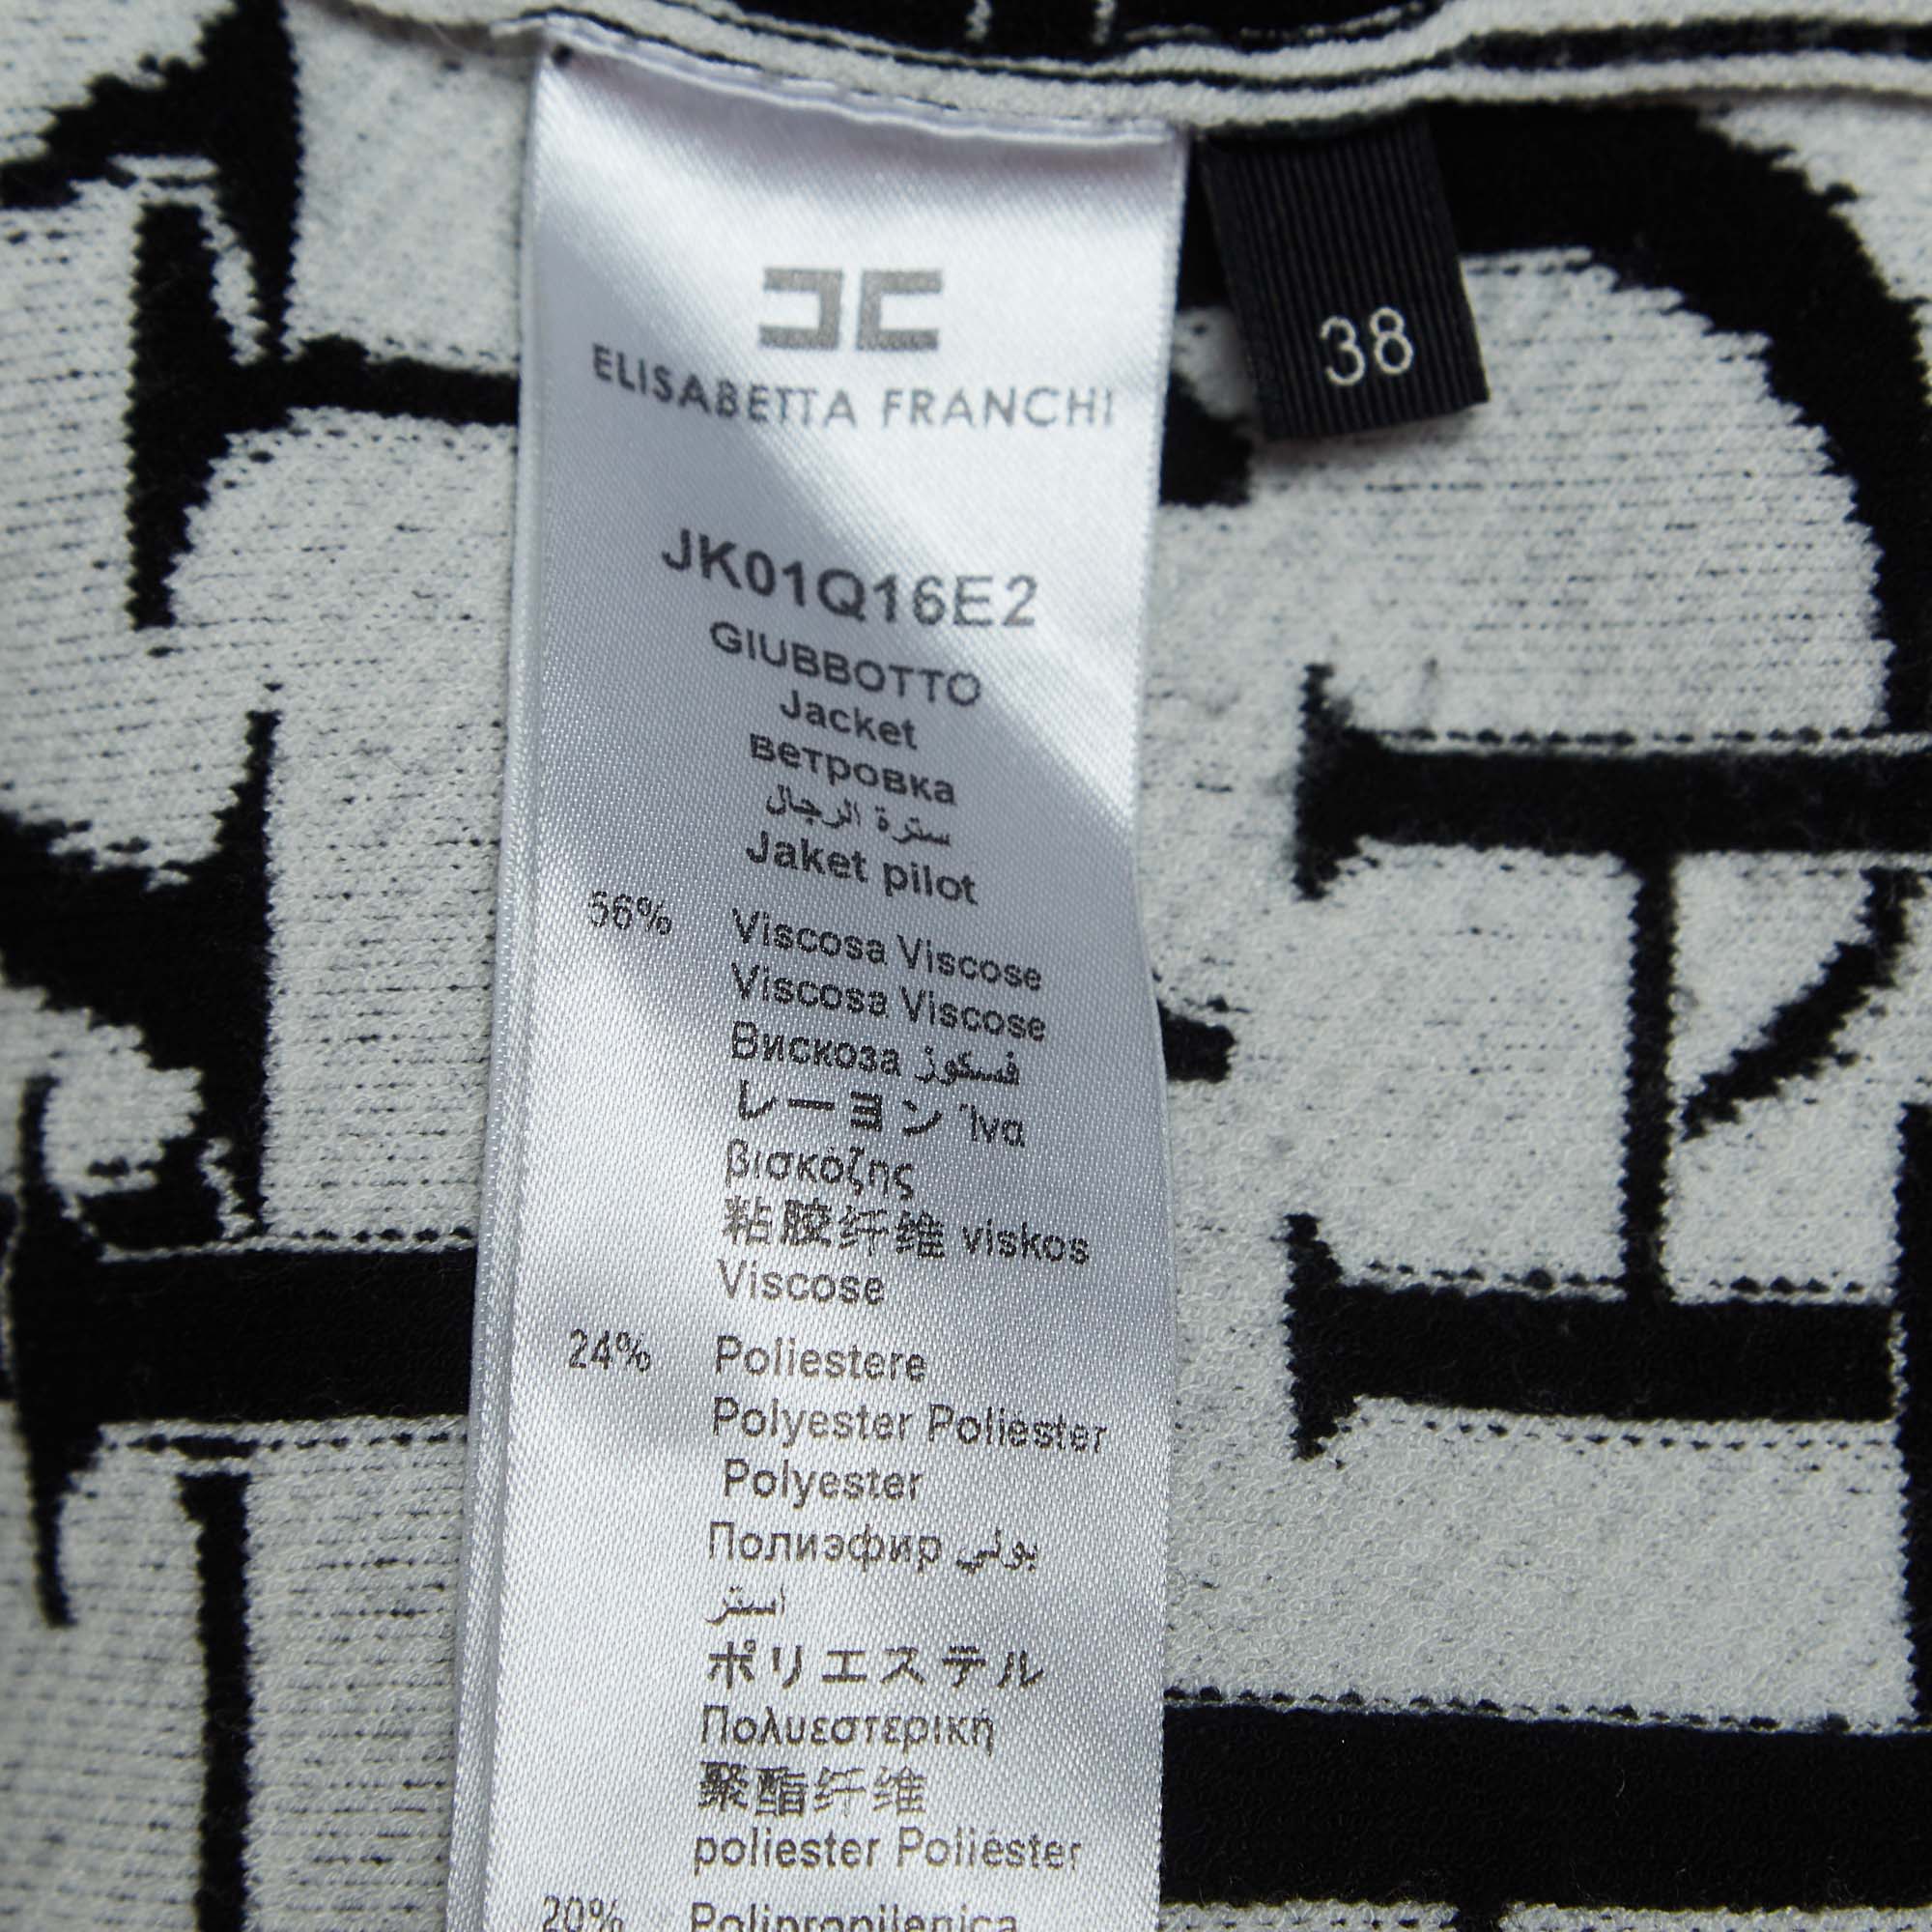 Elisabetta Franchi Black/White Patterned Knit Bomber Jacket S